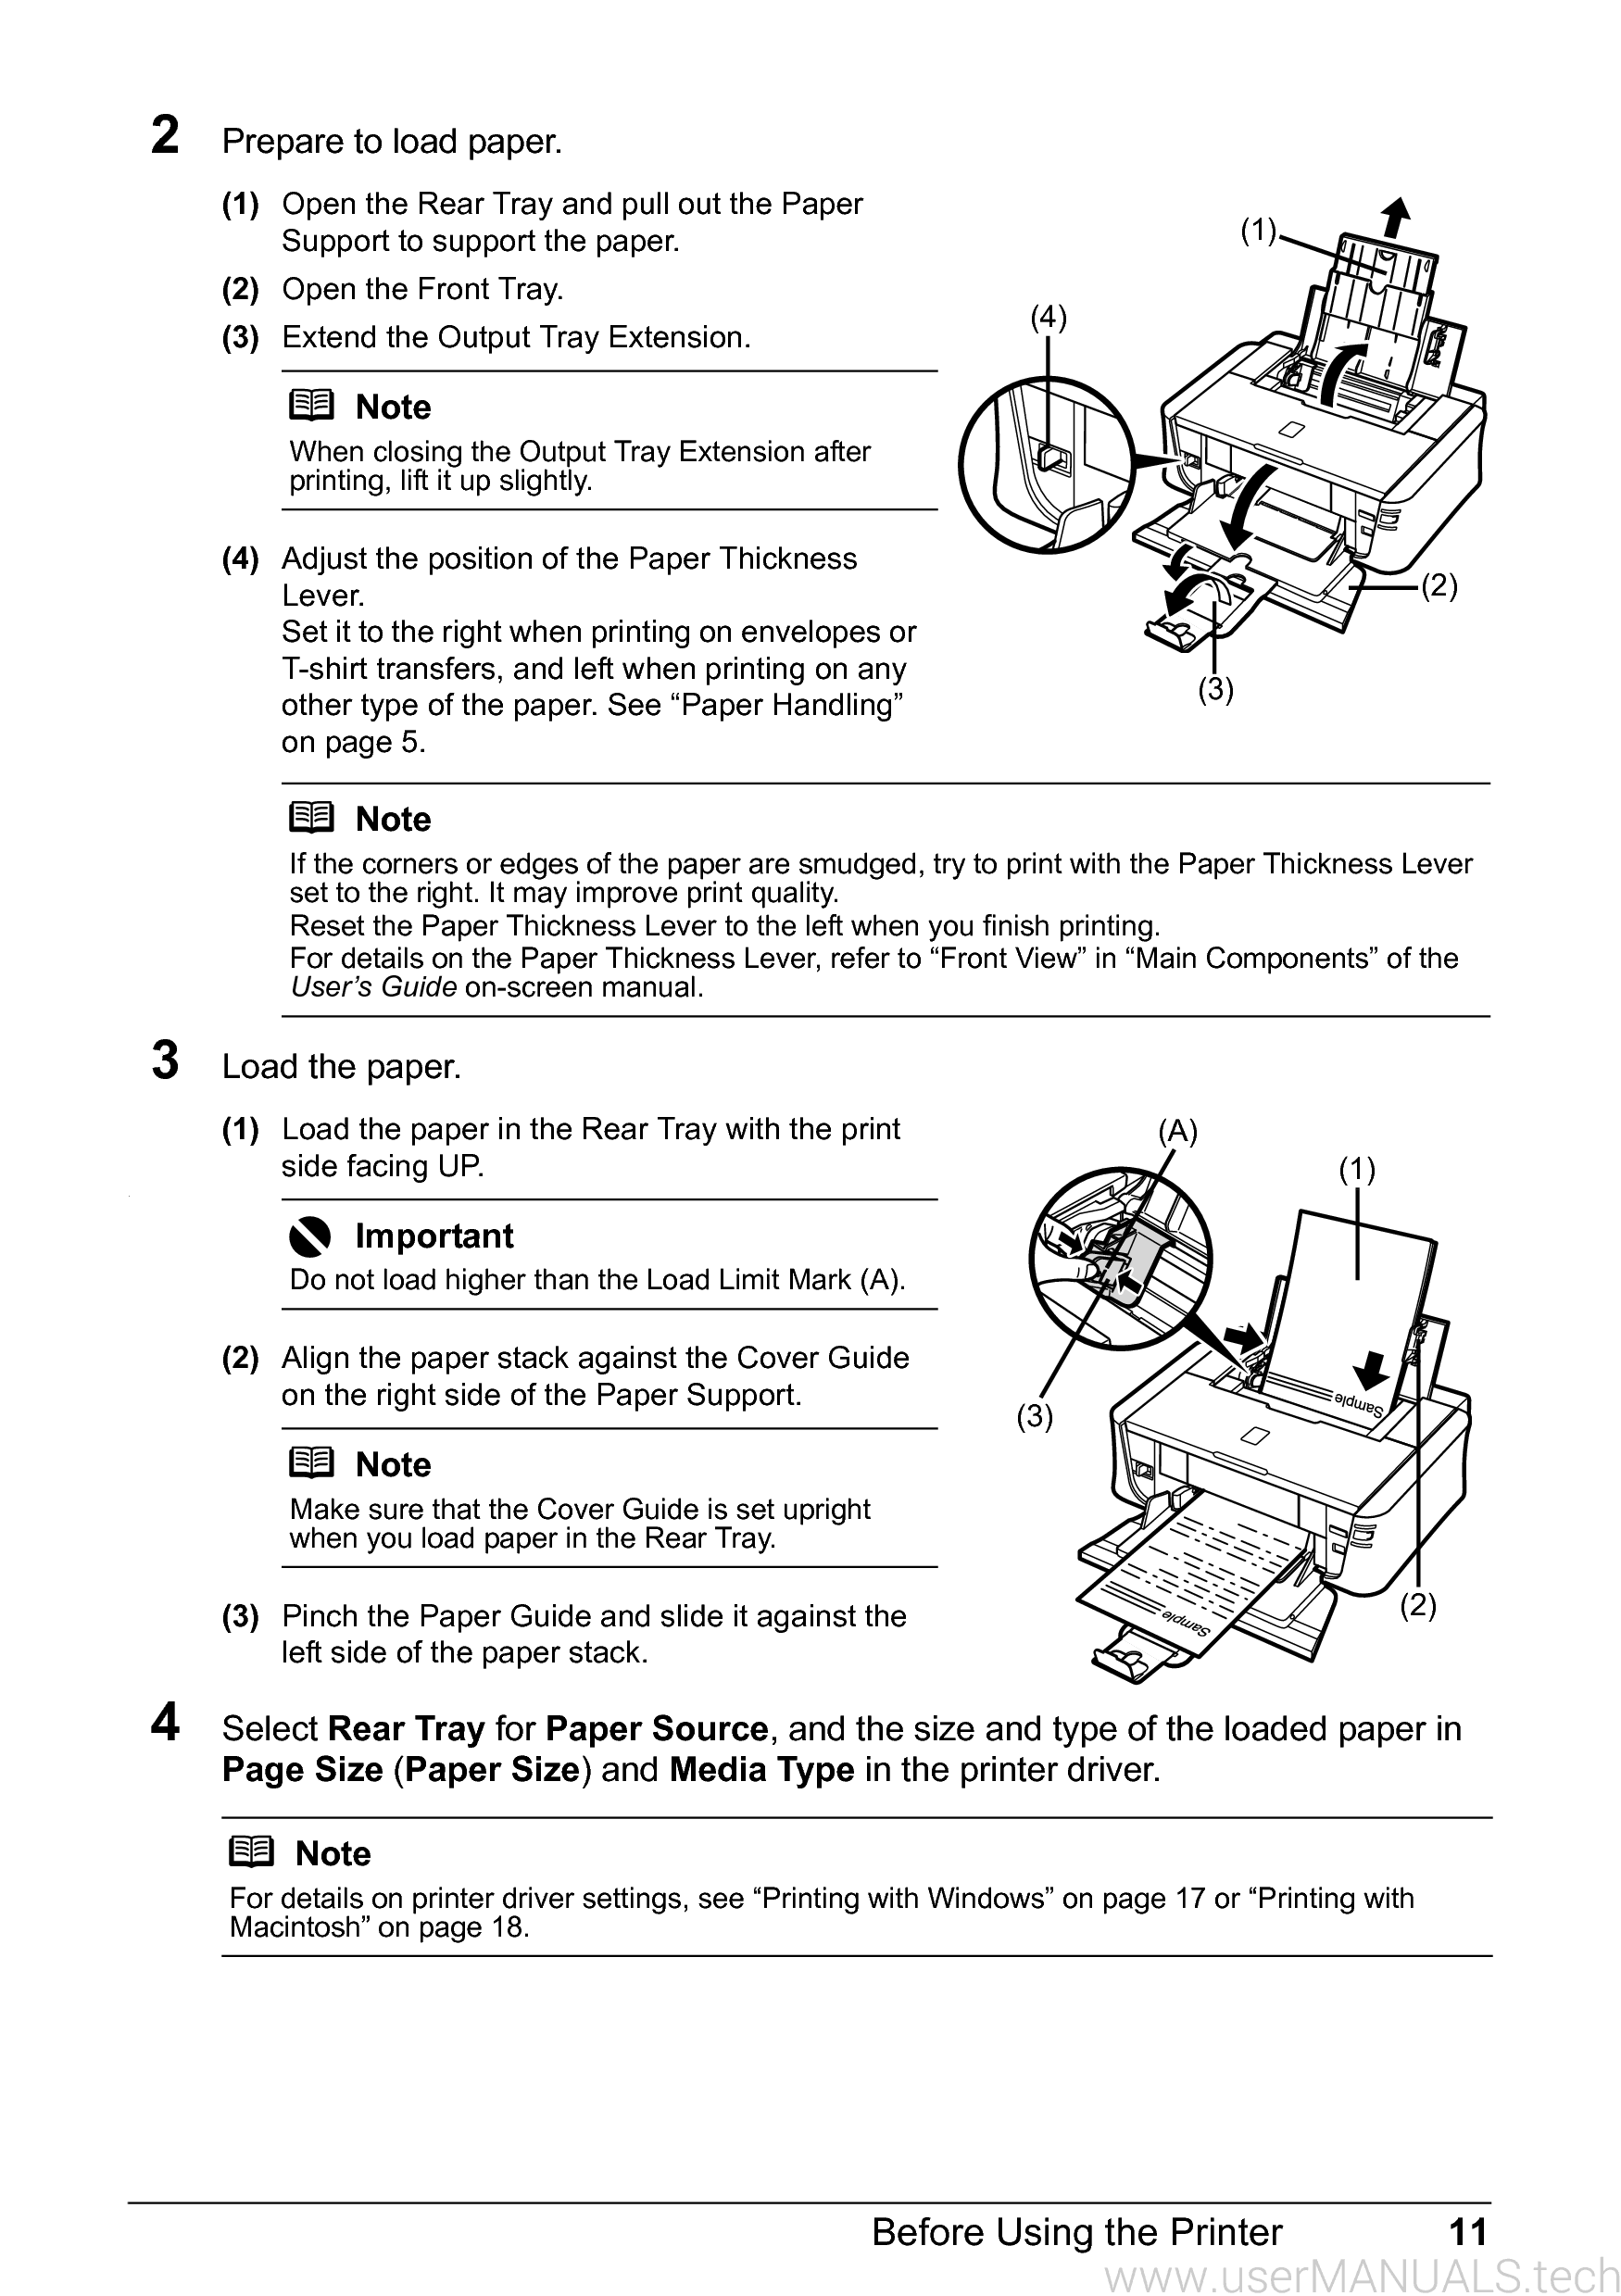 ip2600 canon printer manual